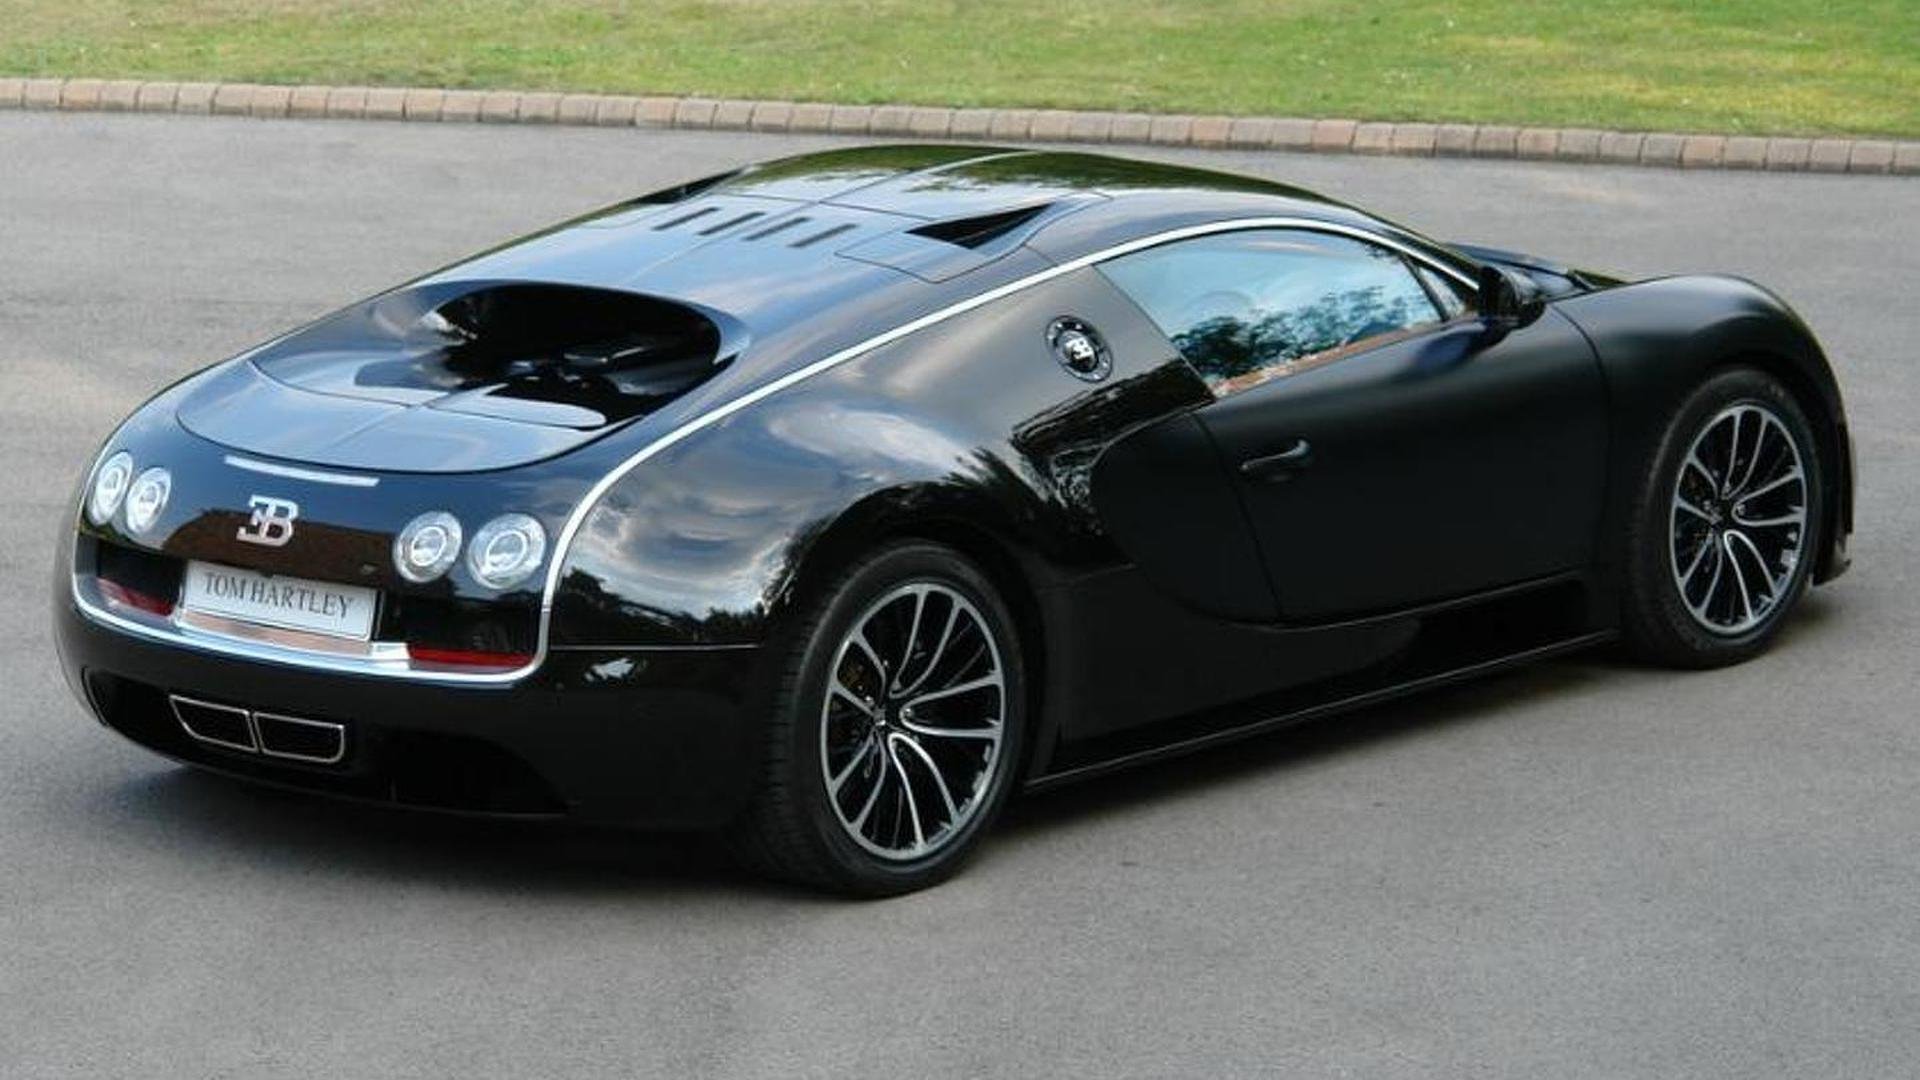 Super sport купить. Bugatti Veyron 16.4 super Sport. Бугатти Вейрон супер спорт черный. Bugatti Veyron 16.4 super Sport черный. Бугатти Вейрон 89.